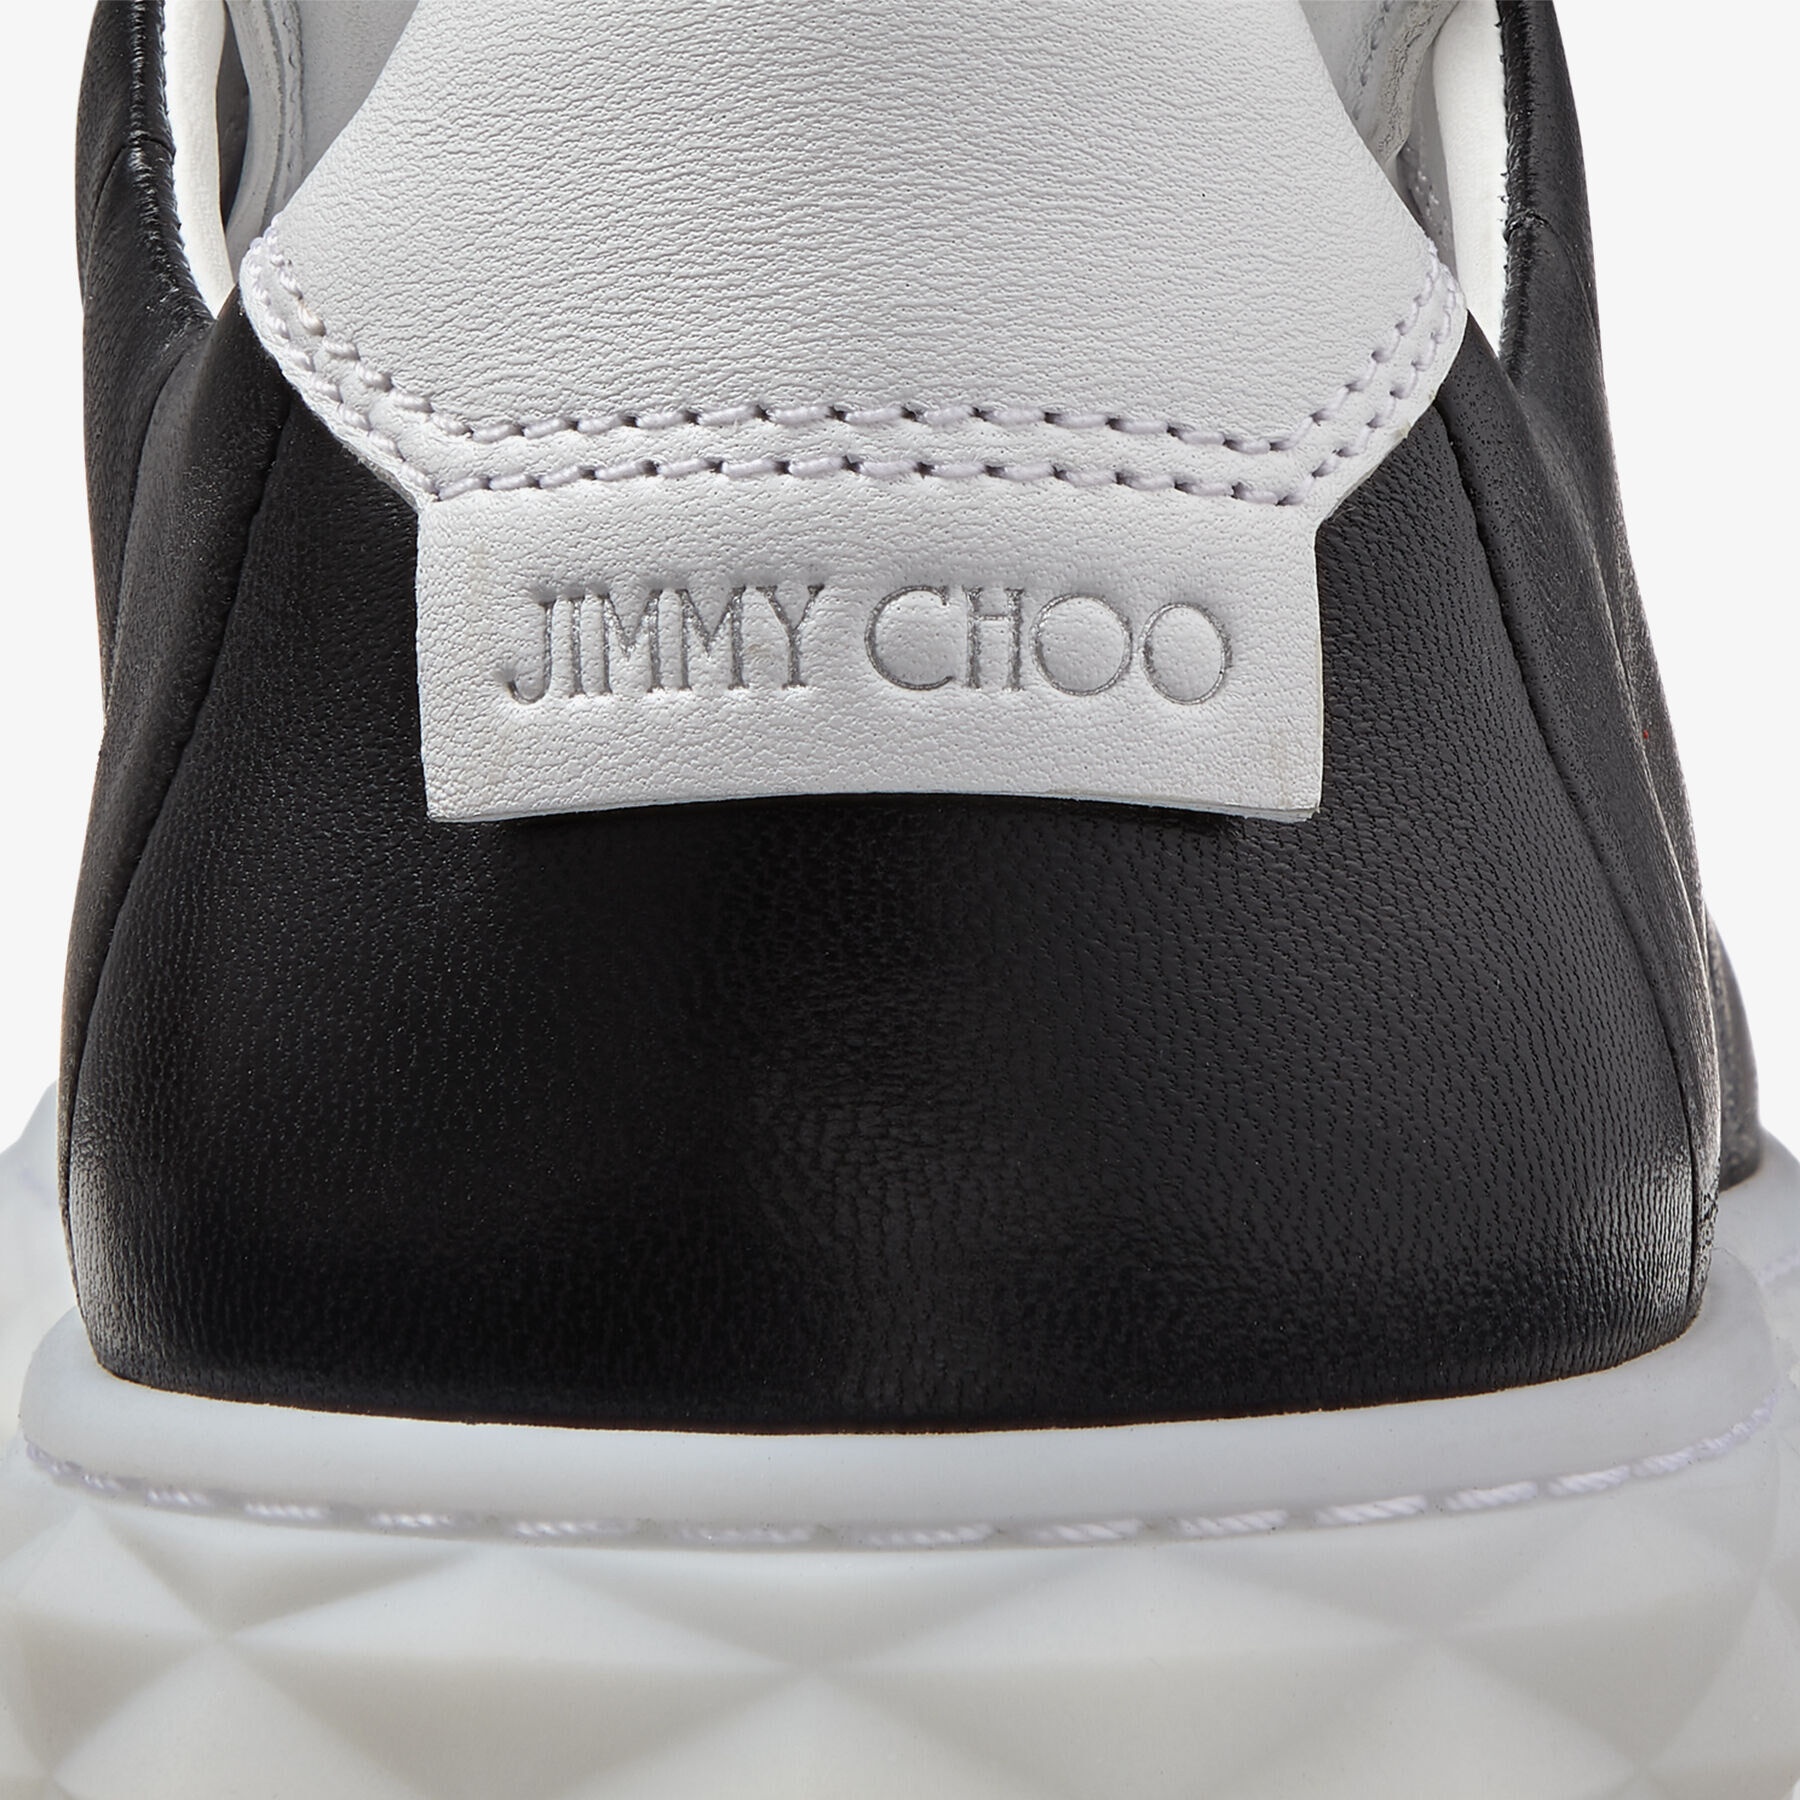 JIMMY CHOO Diamond Light/F Black Nappa Leather Low-Top Trainers